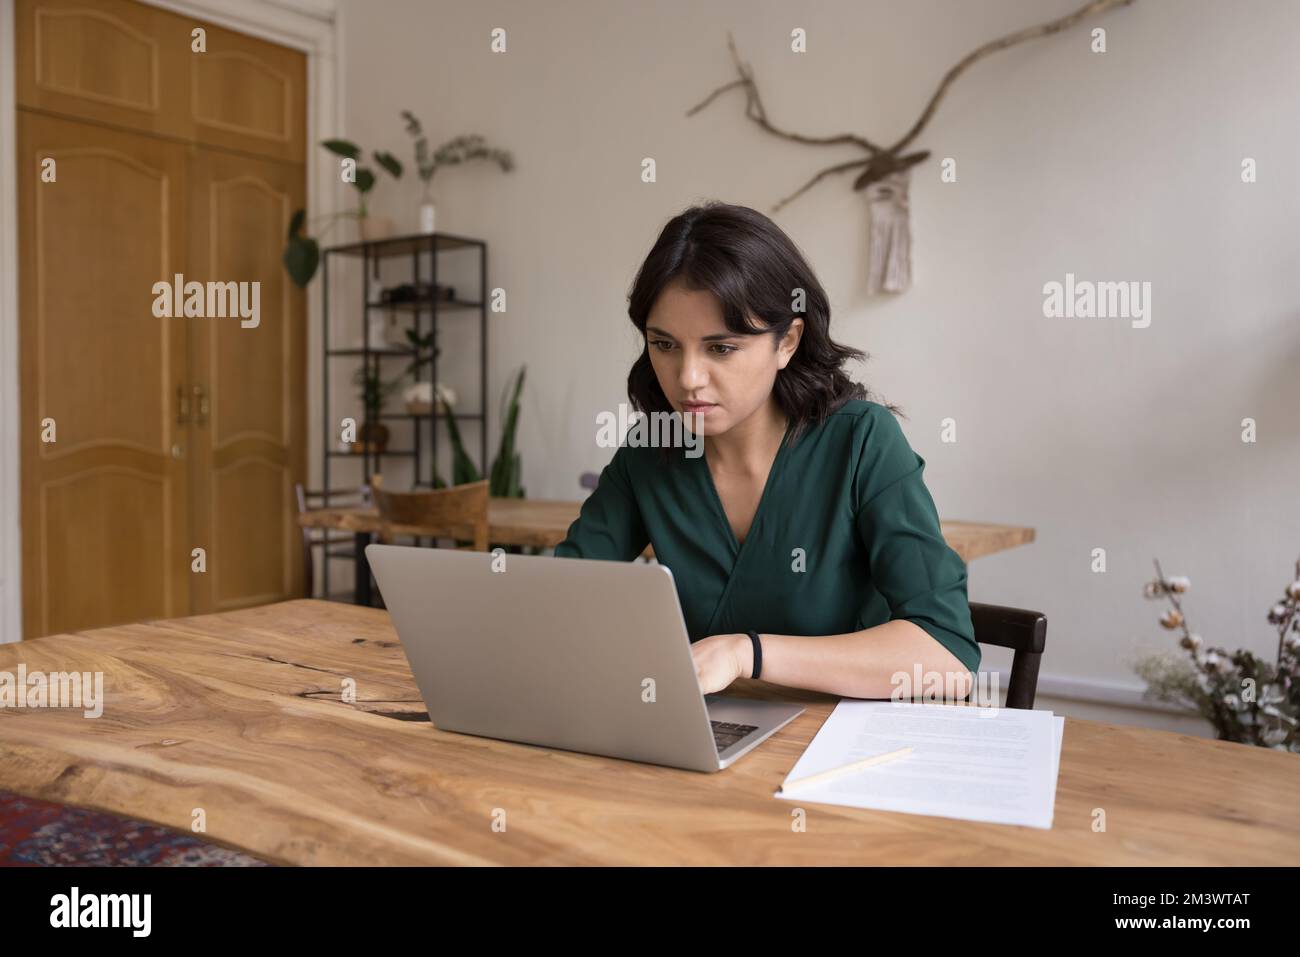 Focused engaged freelance employee woman using laptop computer Stock Photo